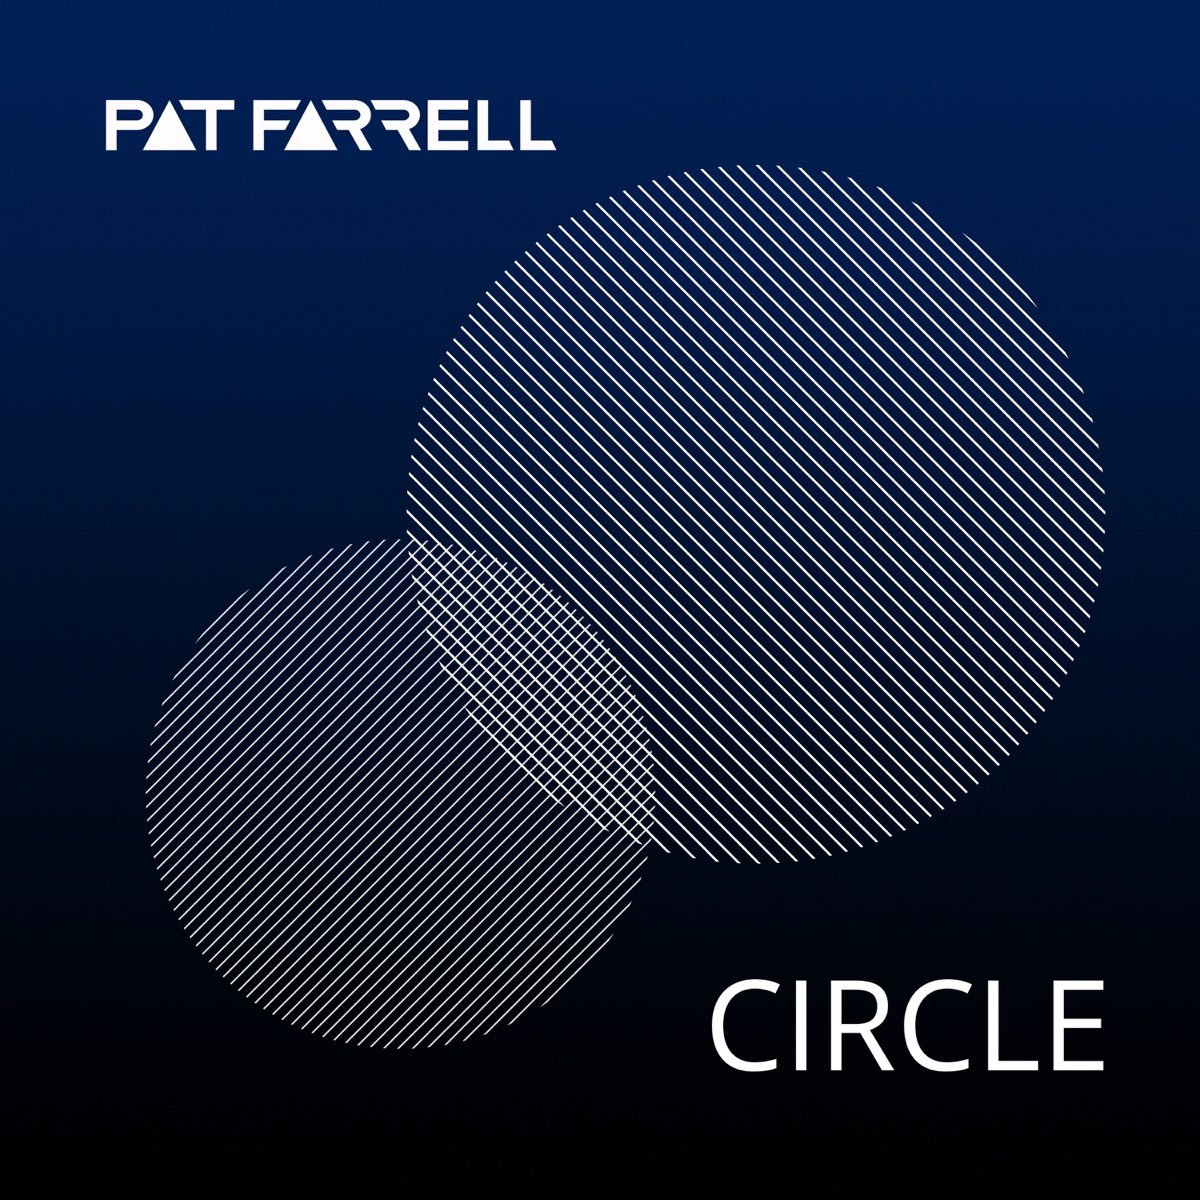 Circle альбом. Circles песня.